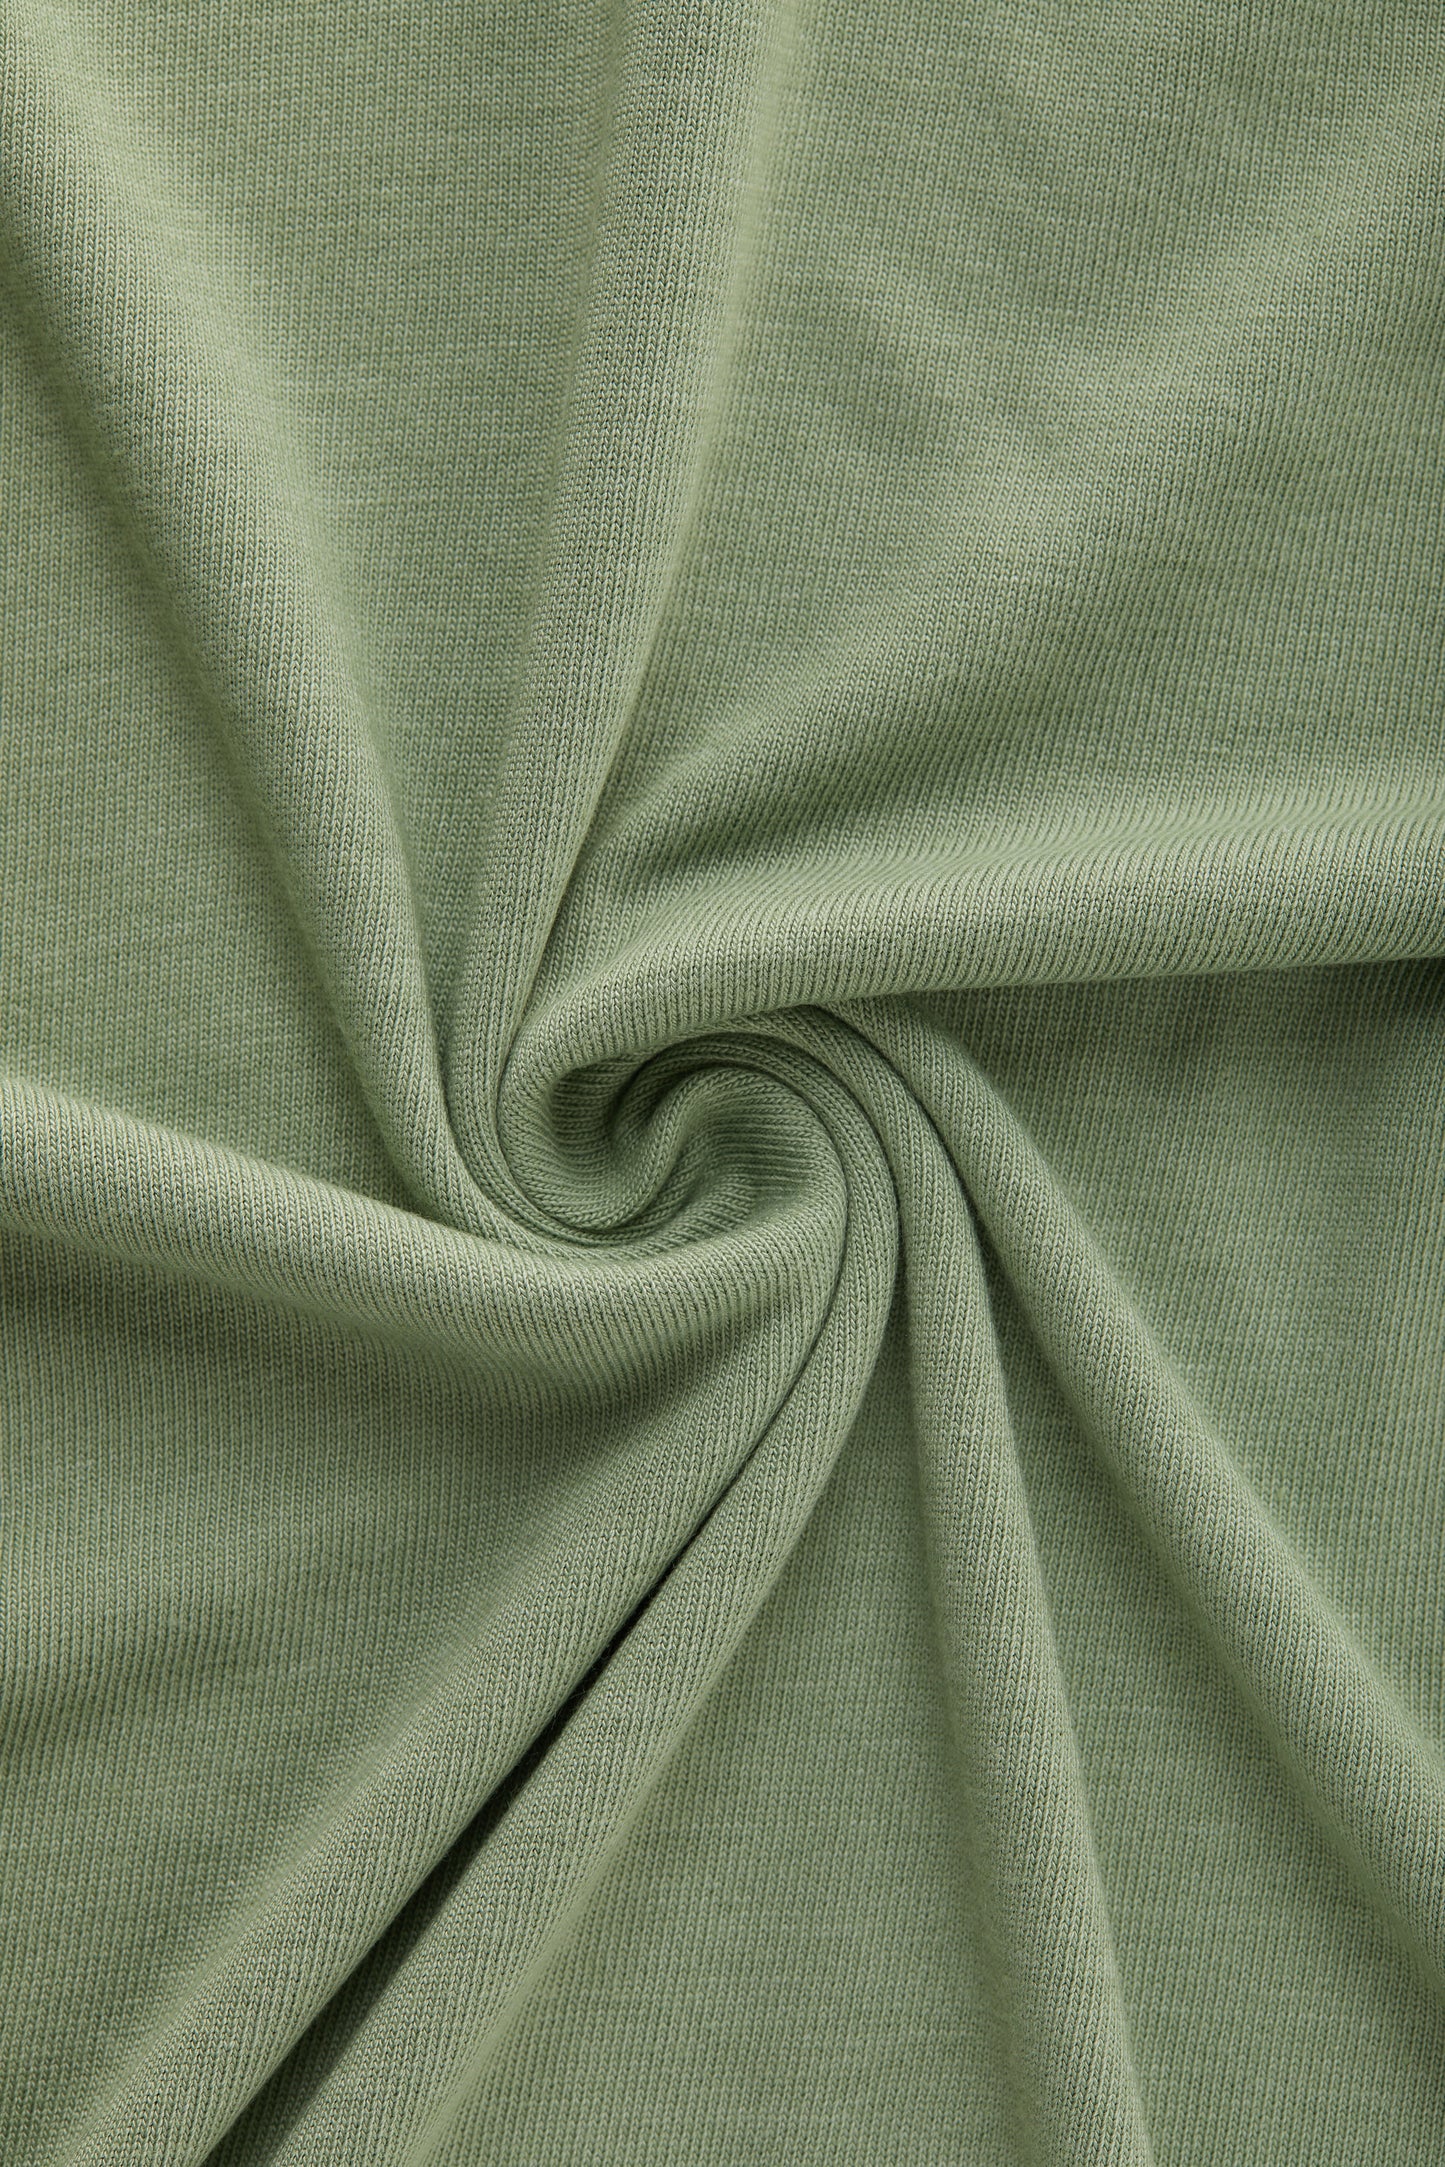 Galba Long Sleeve Hooded Tee Shirt Green Oil